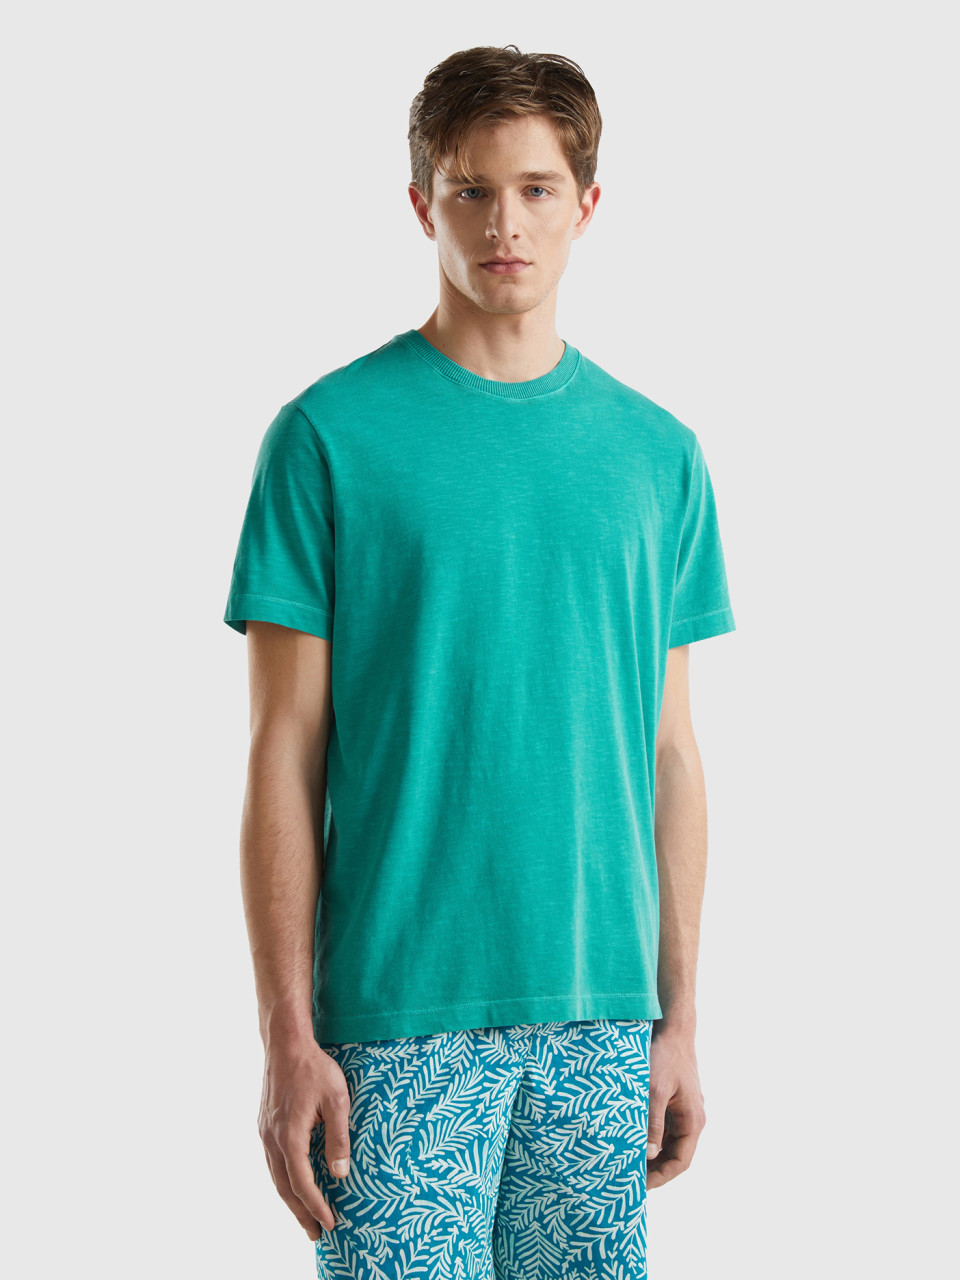 Benetton, Camiseta Ligera Relaxed Fit, Verde, Hombre